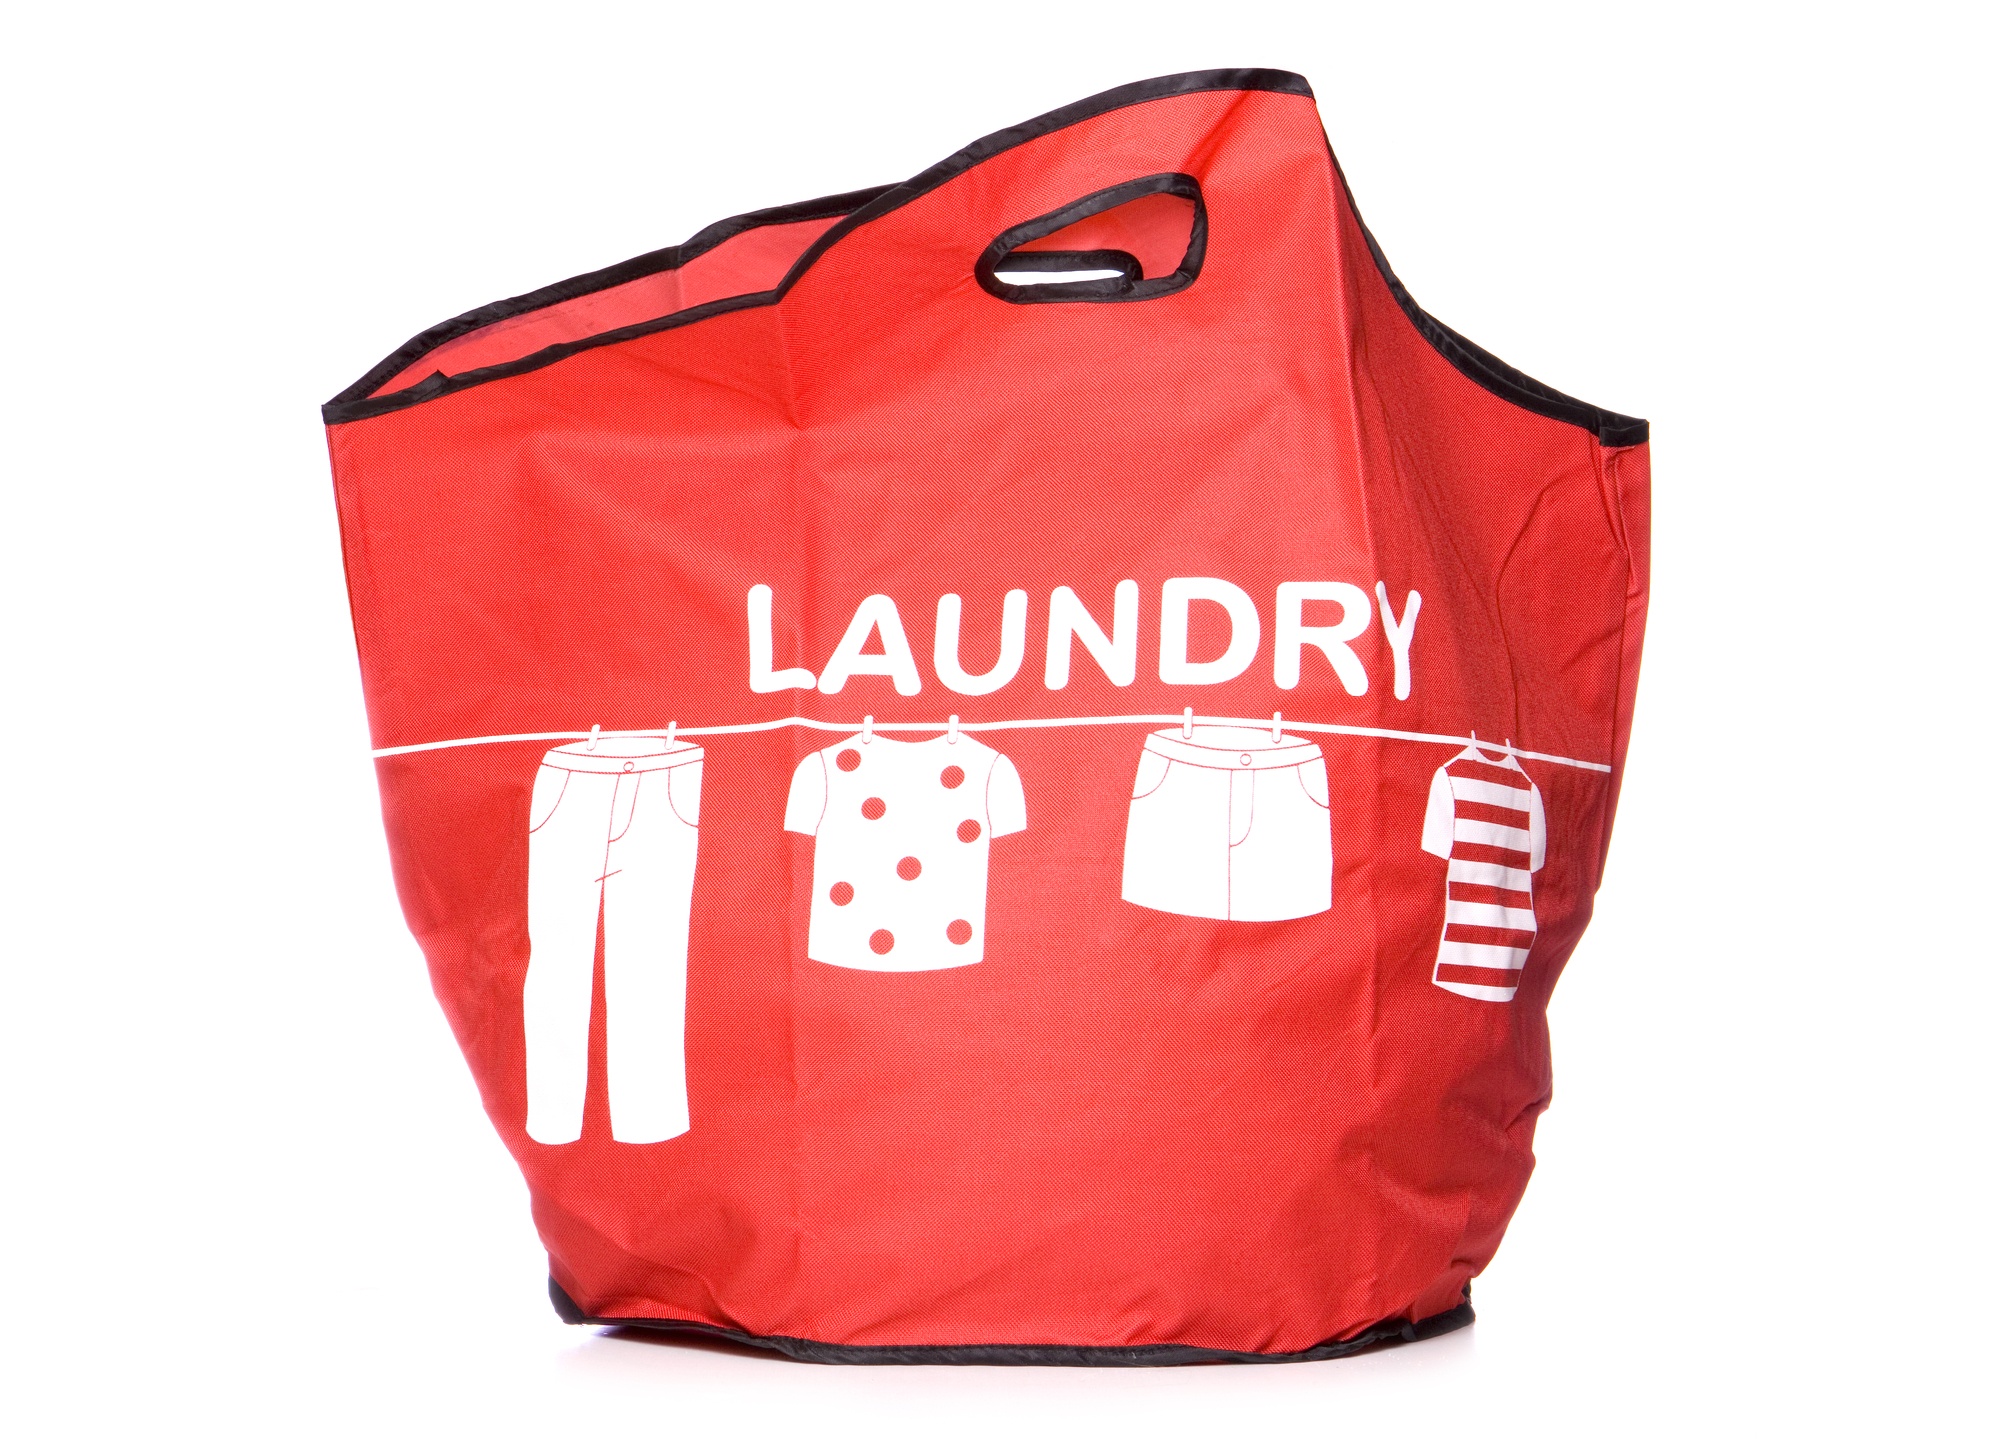 Travel laundry bag